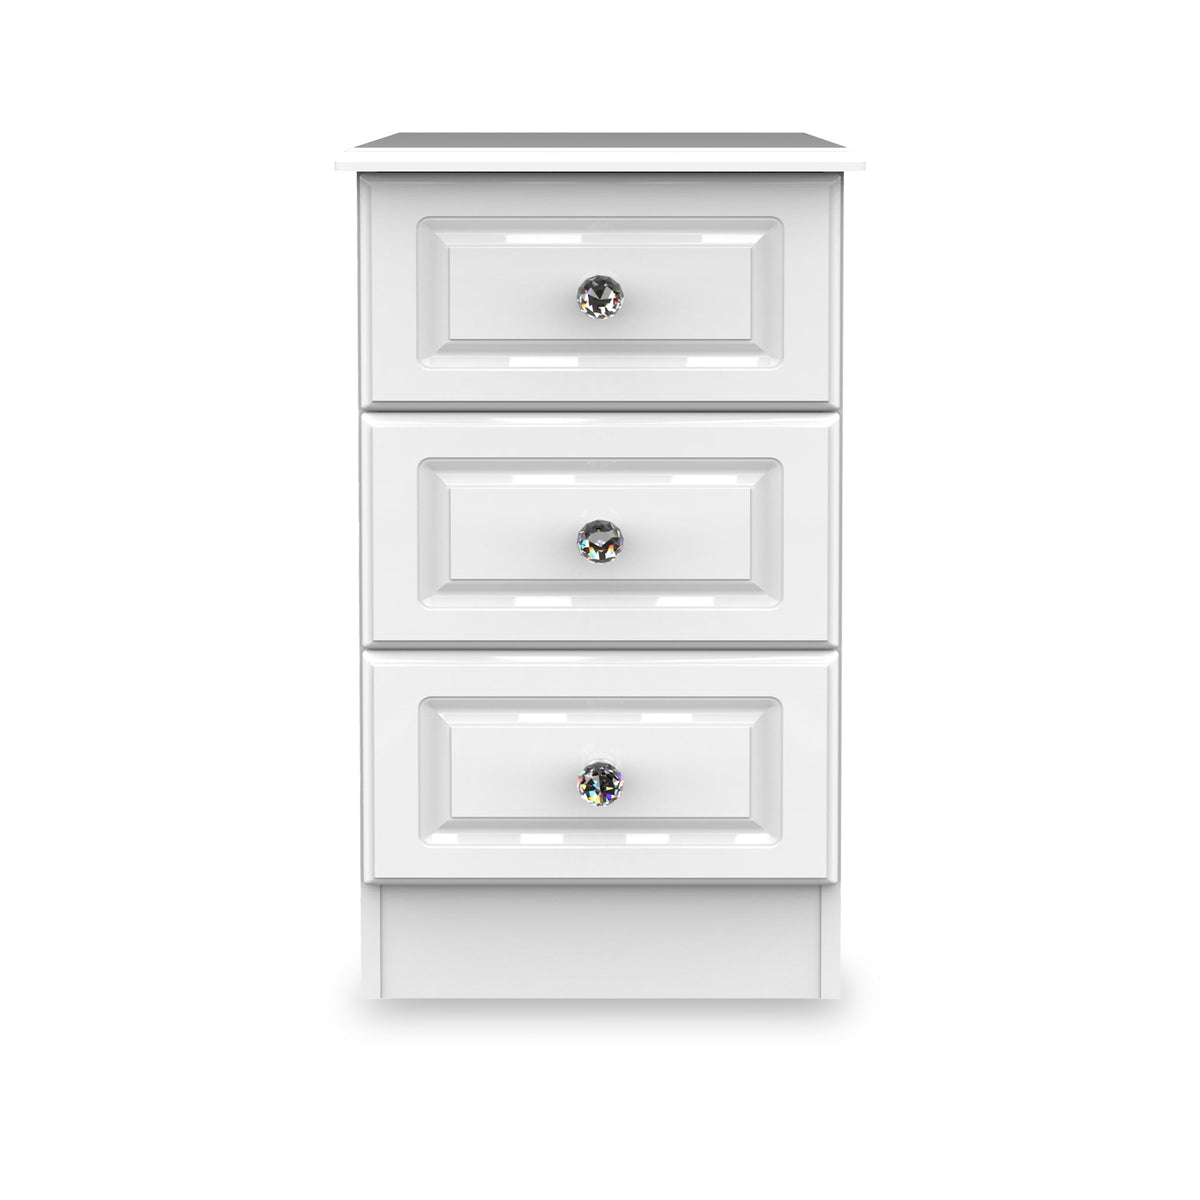 Kinsley White Gloss 3 Drawer Bedside Cabinet from Roseland